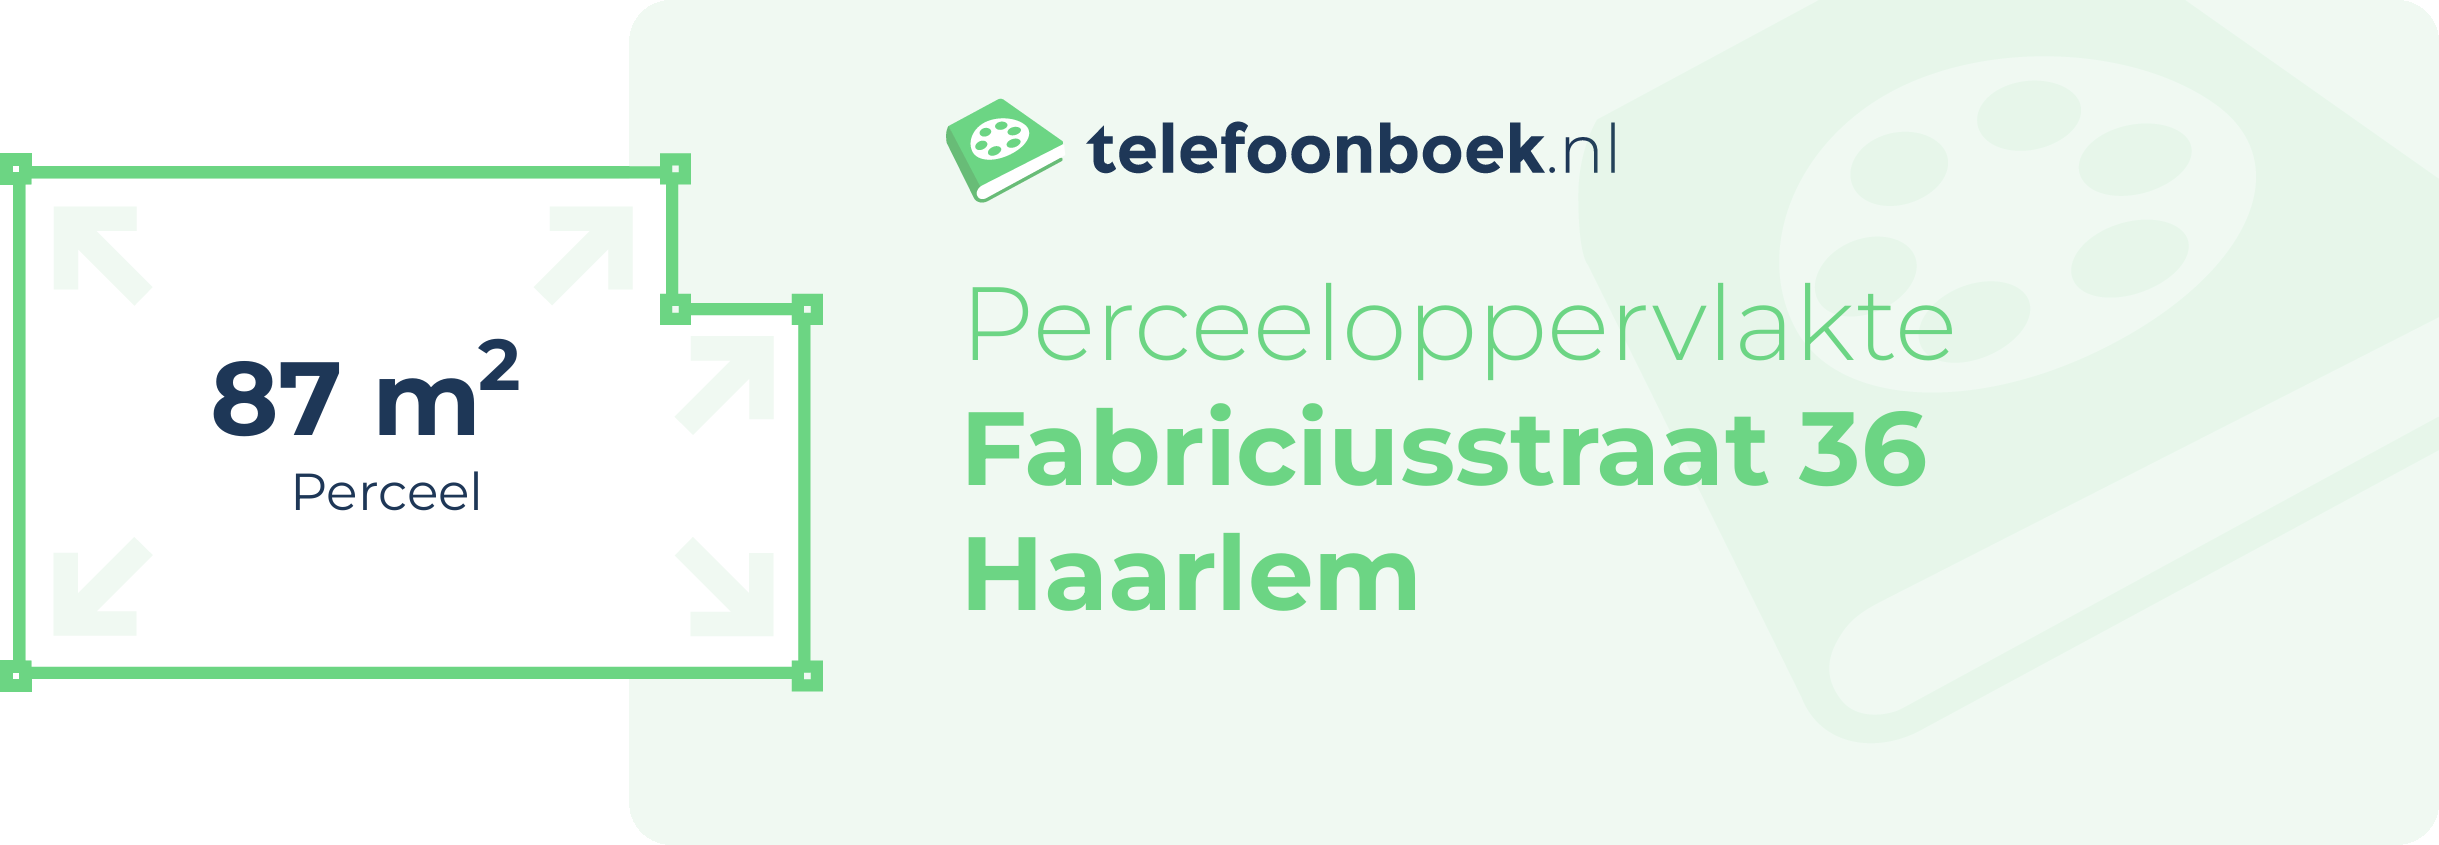 Perceeloppervlakte Fabriciusstraat 36 Haarlem